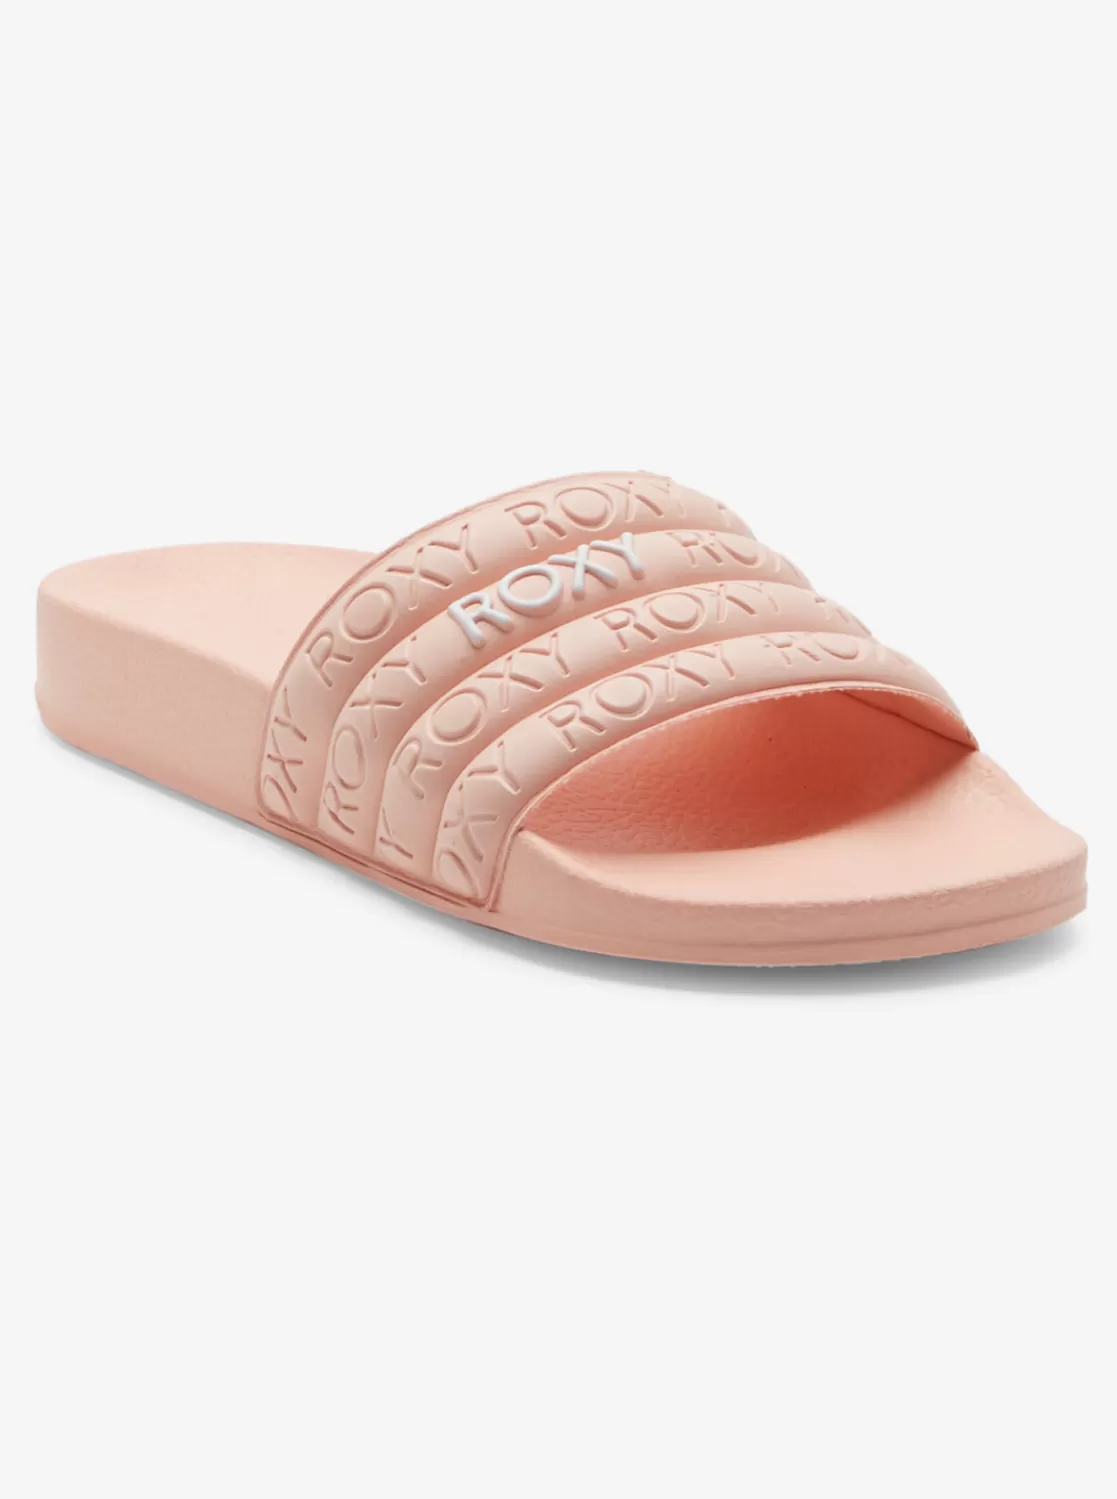 Girls 4-16 Slippy Water-Friendly Sandals-ROXY Sale